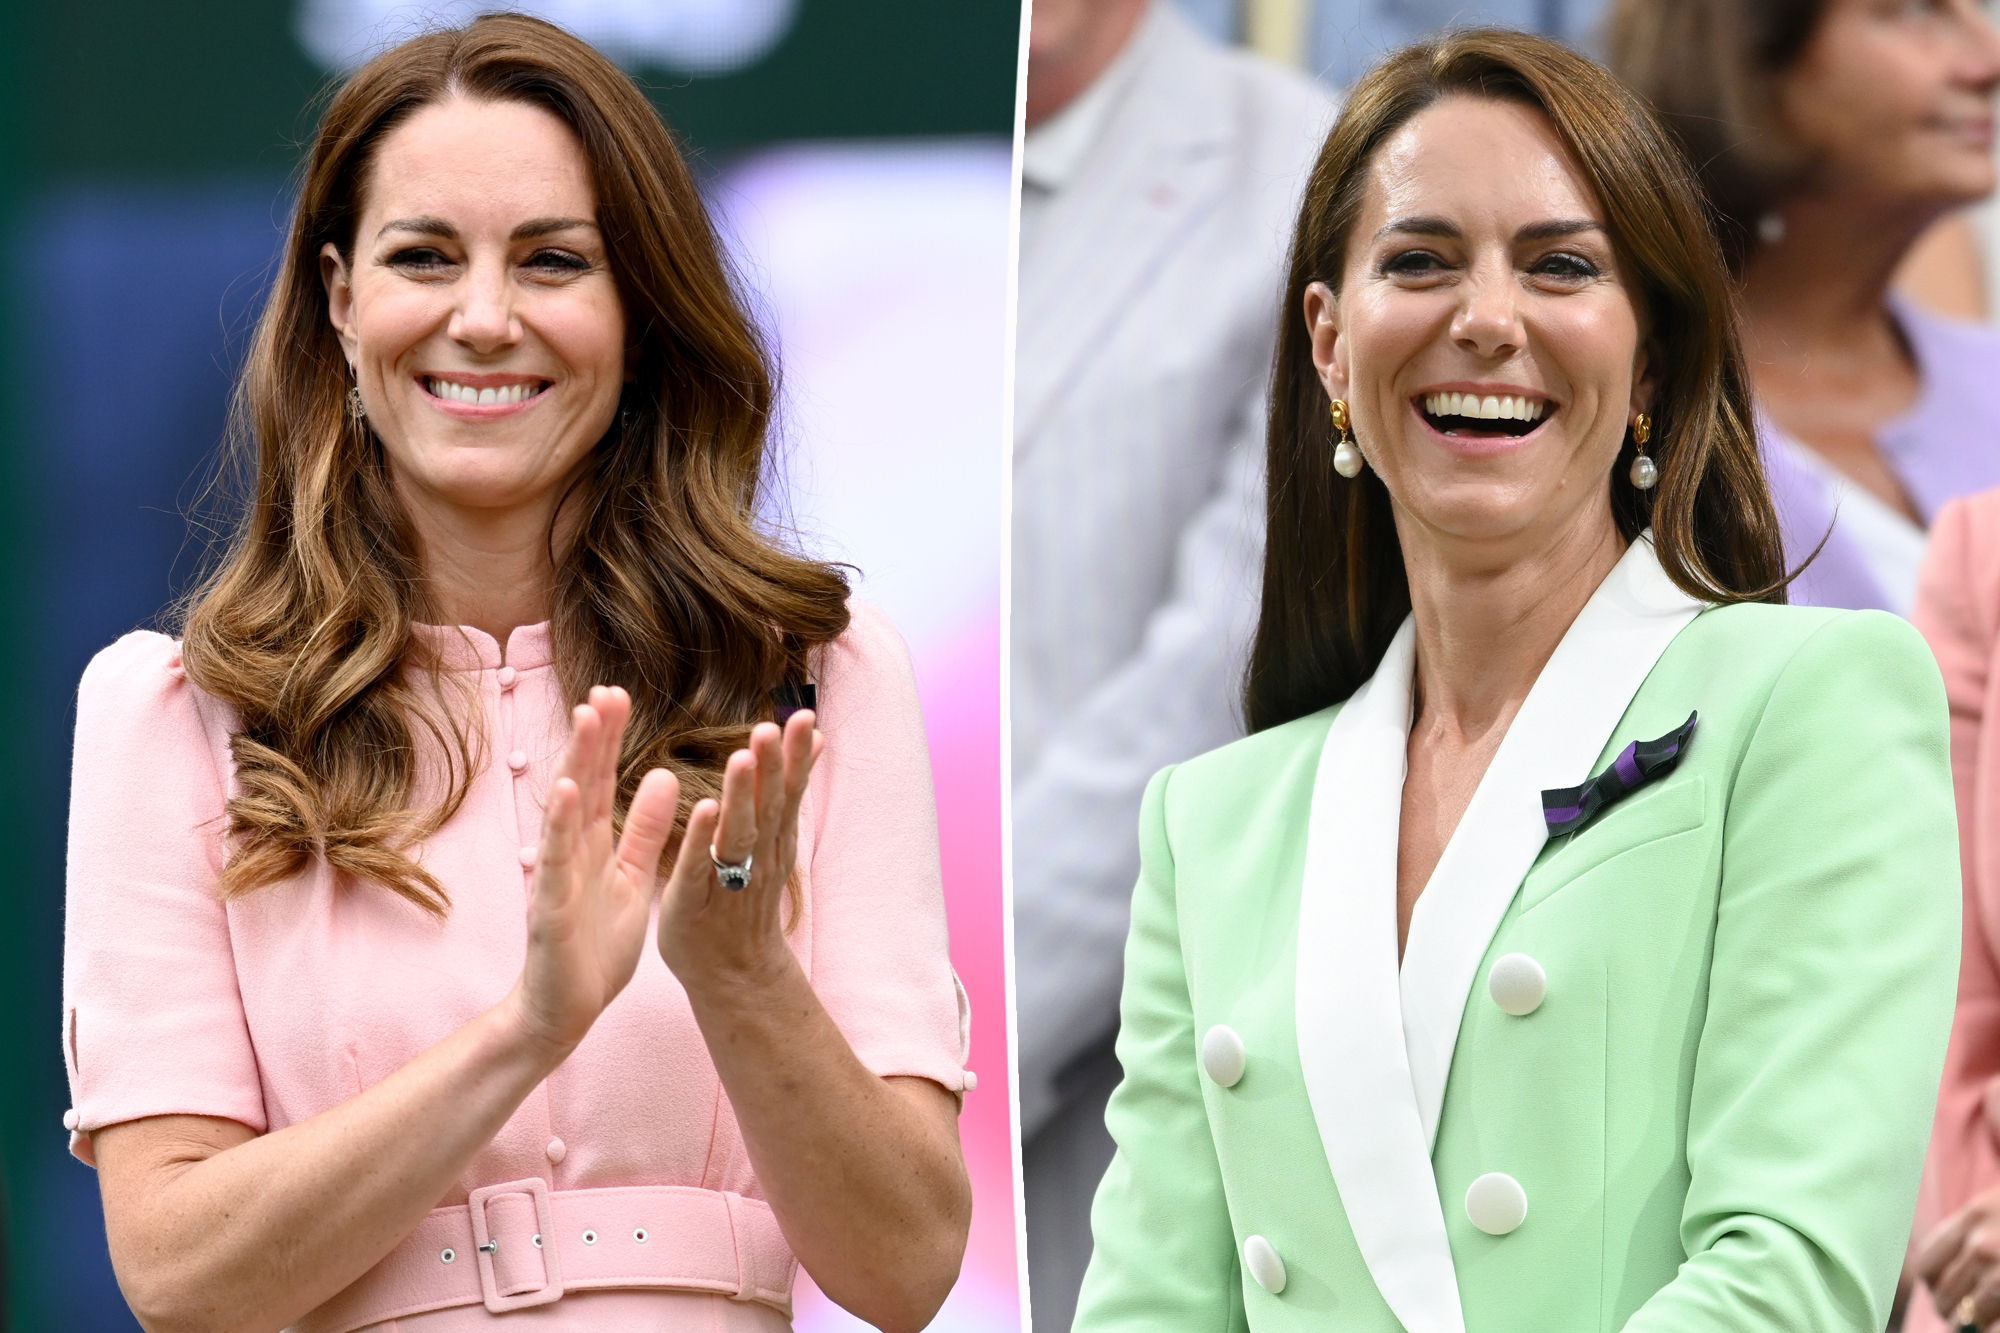 Kate Middleton's Inspiring Wimbledon Appearance Amid Cancer Battle